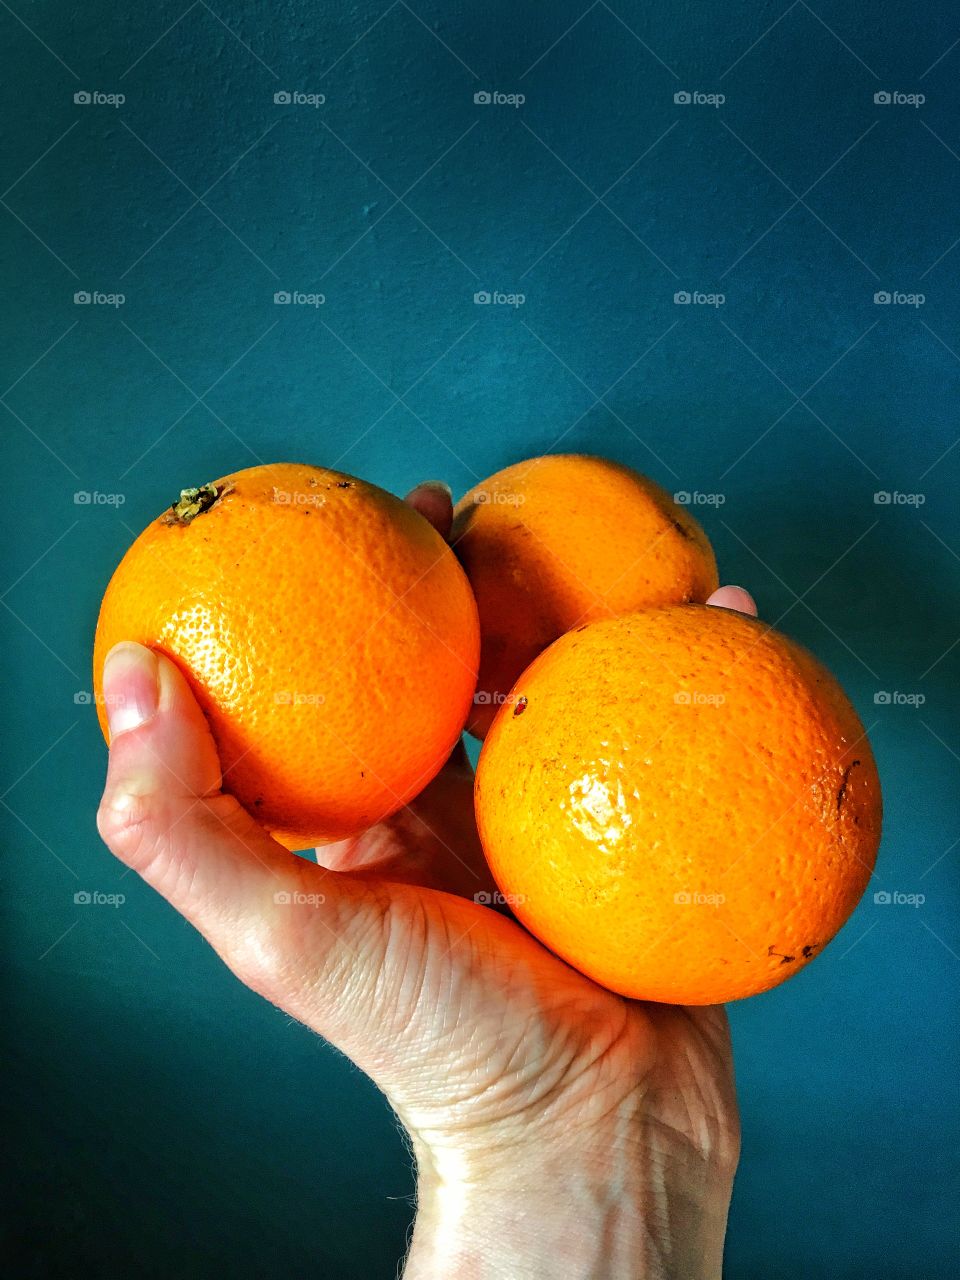 Holding oranges